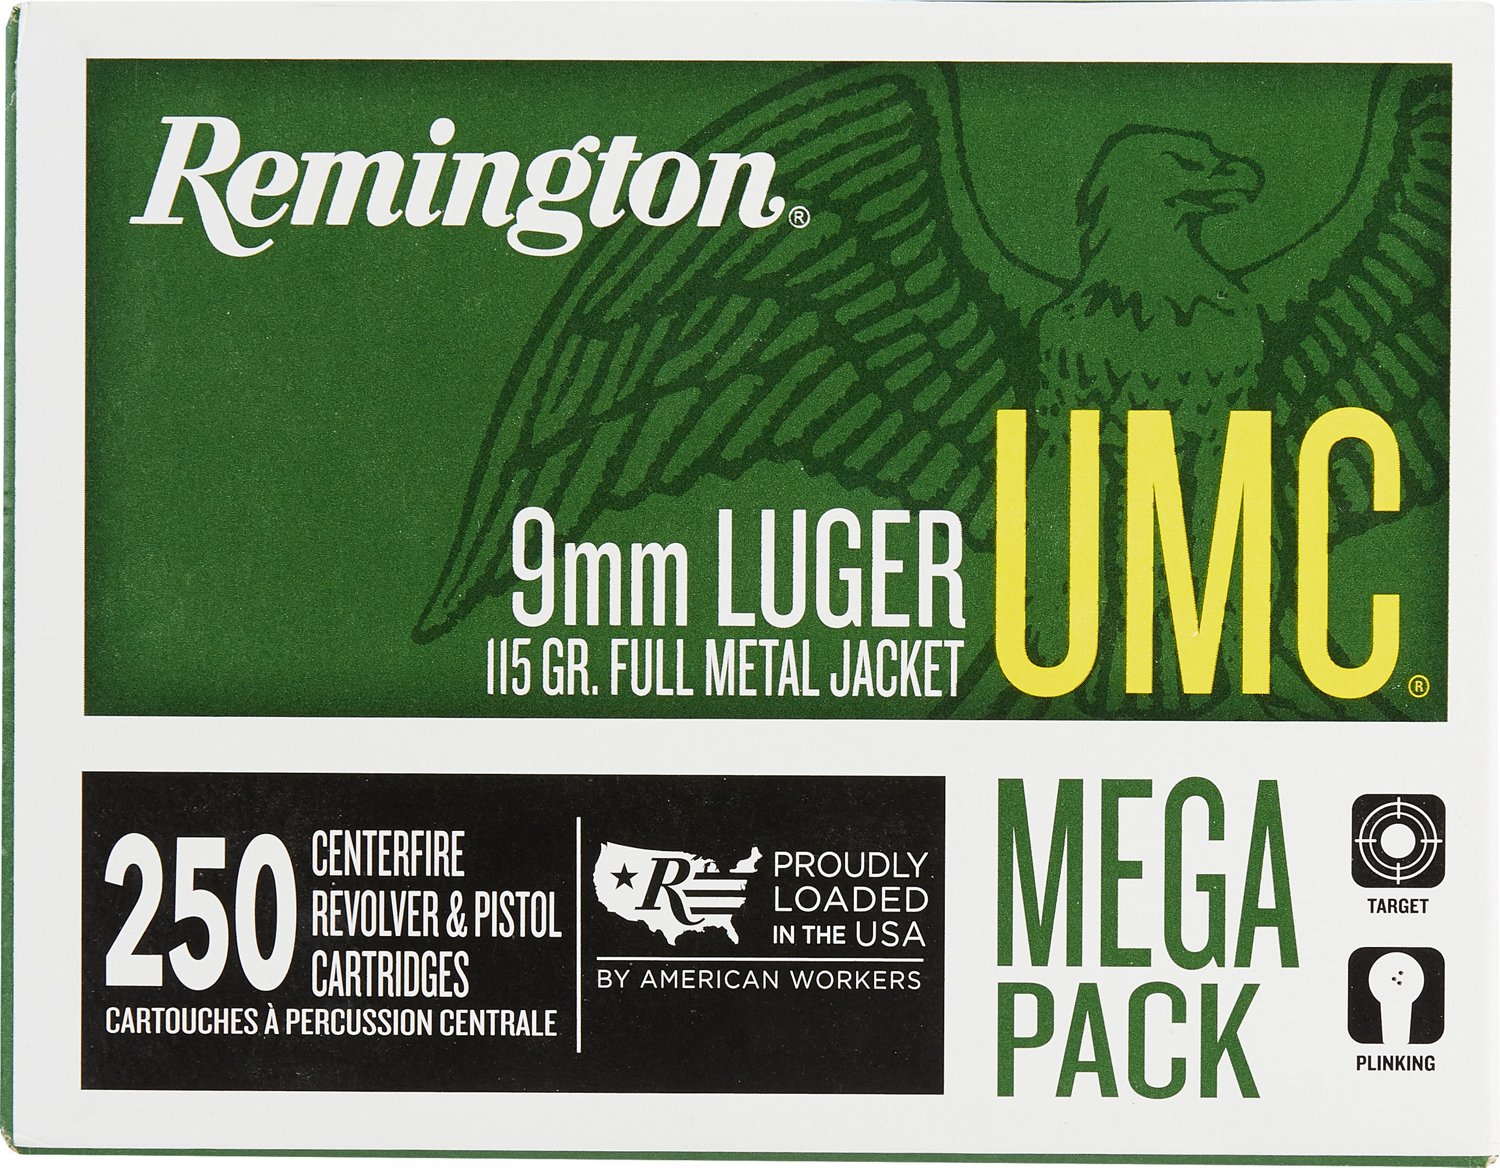 Remington 9Mm Ammo